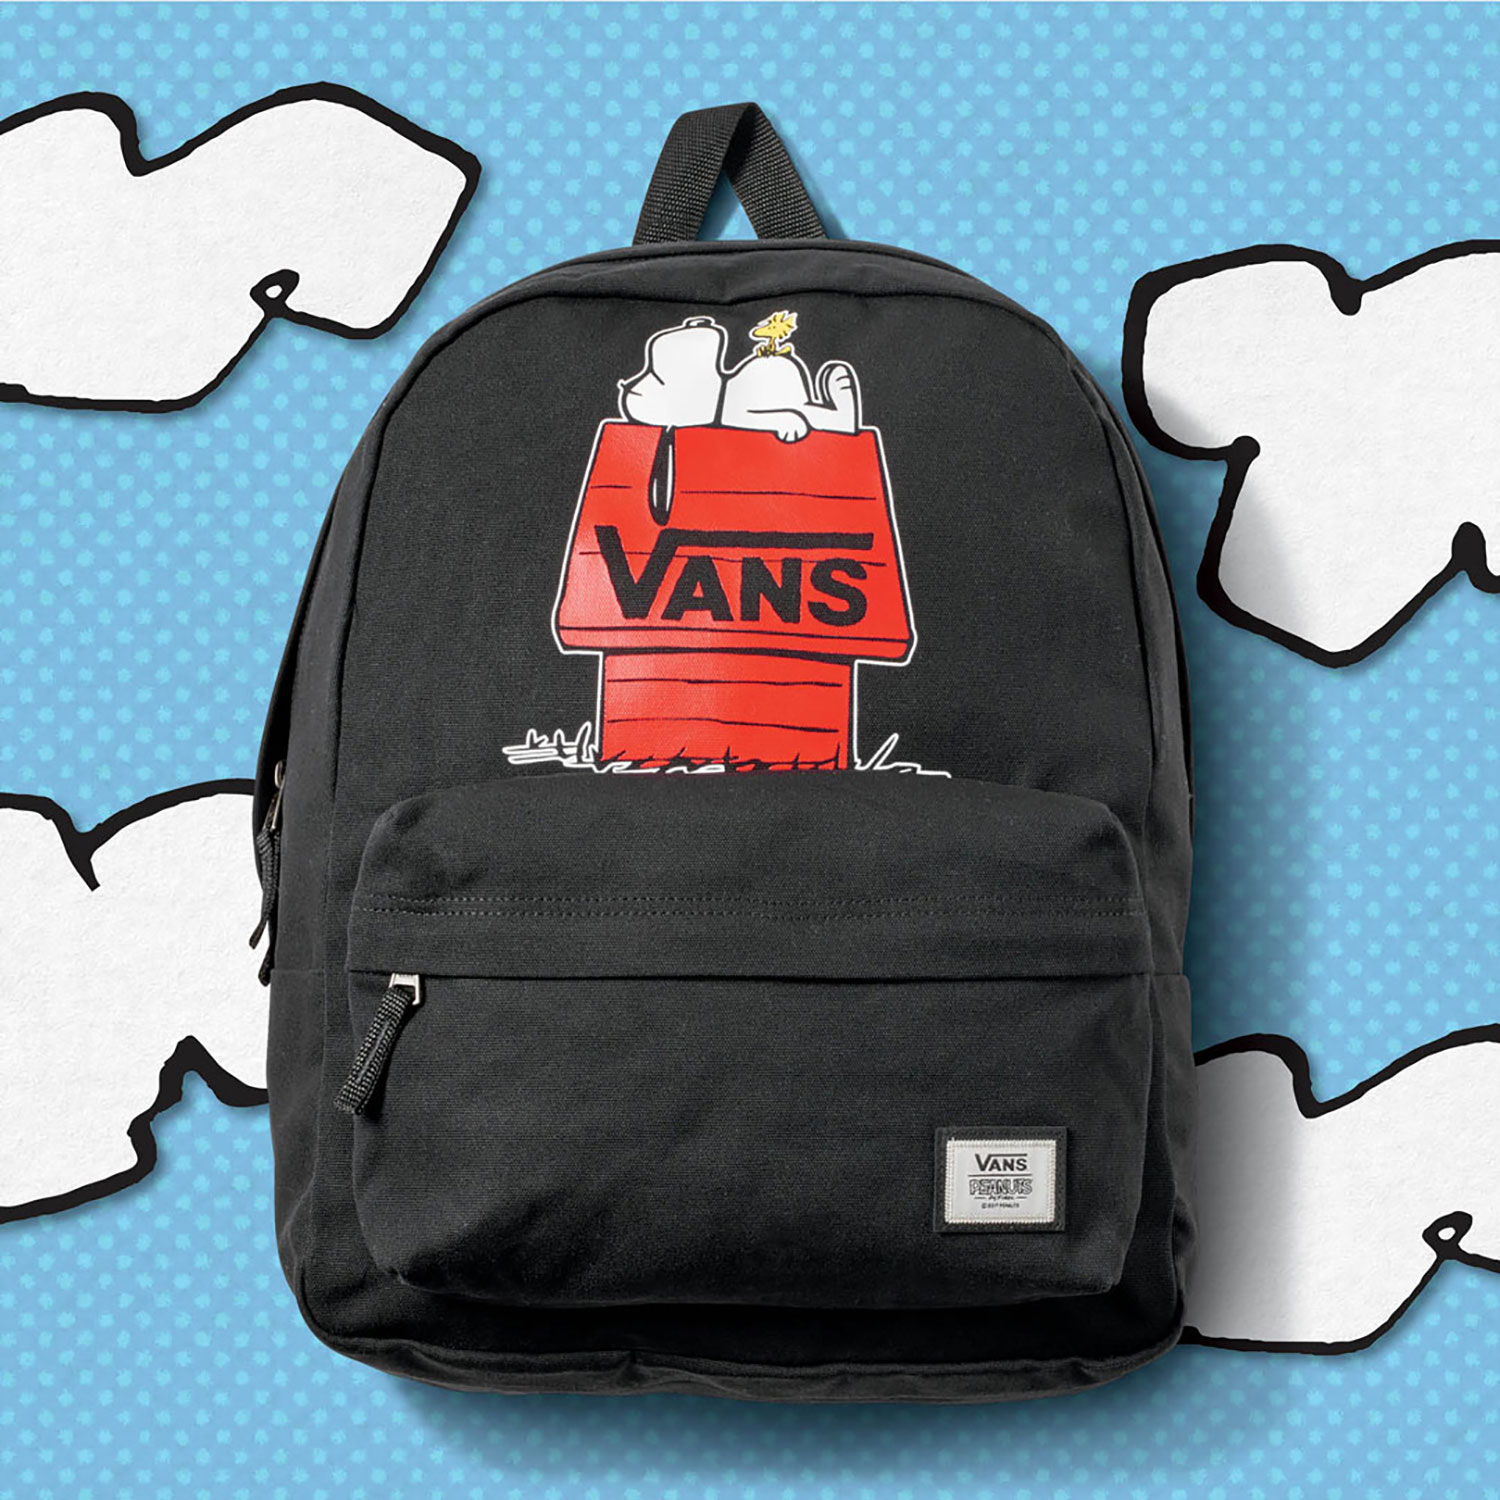 Vans Peanuts Realm Backpack